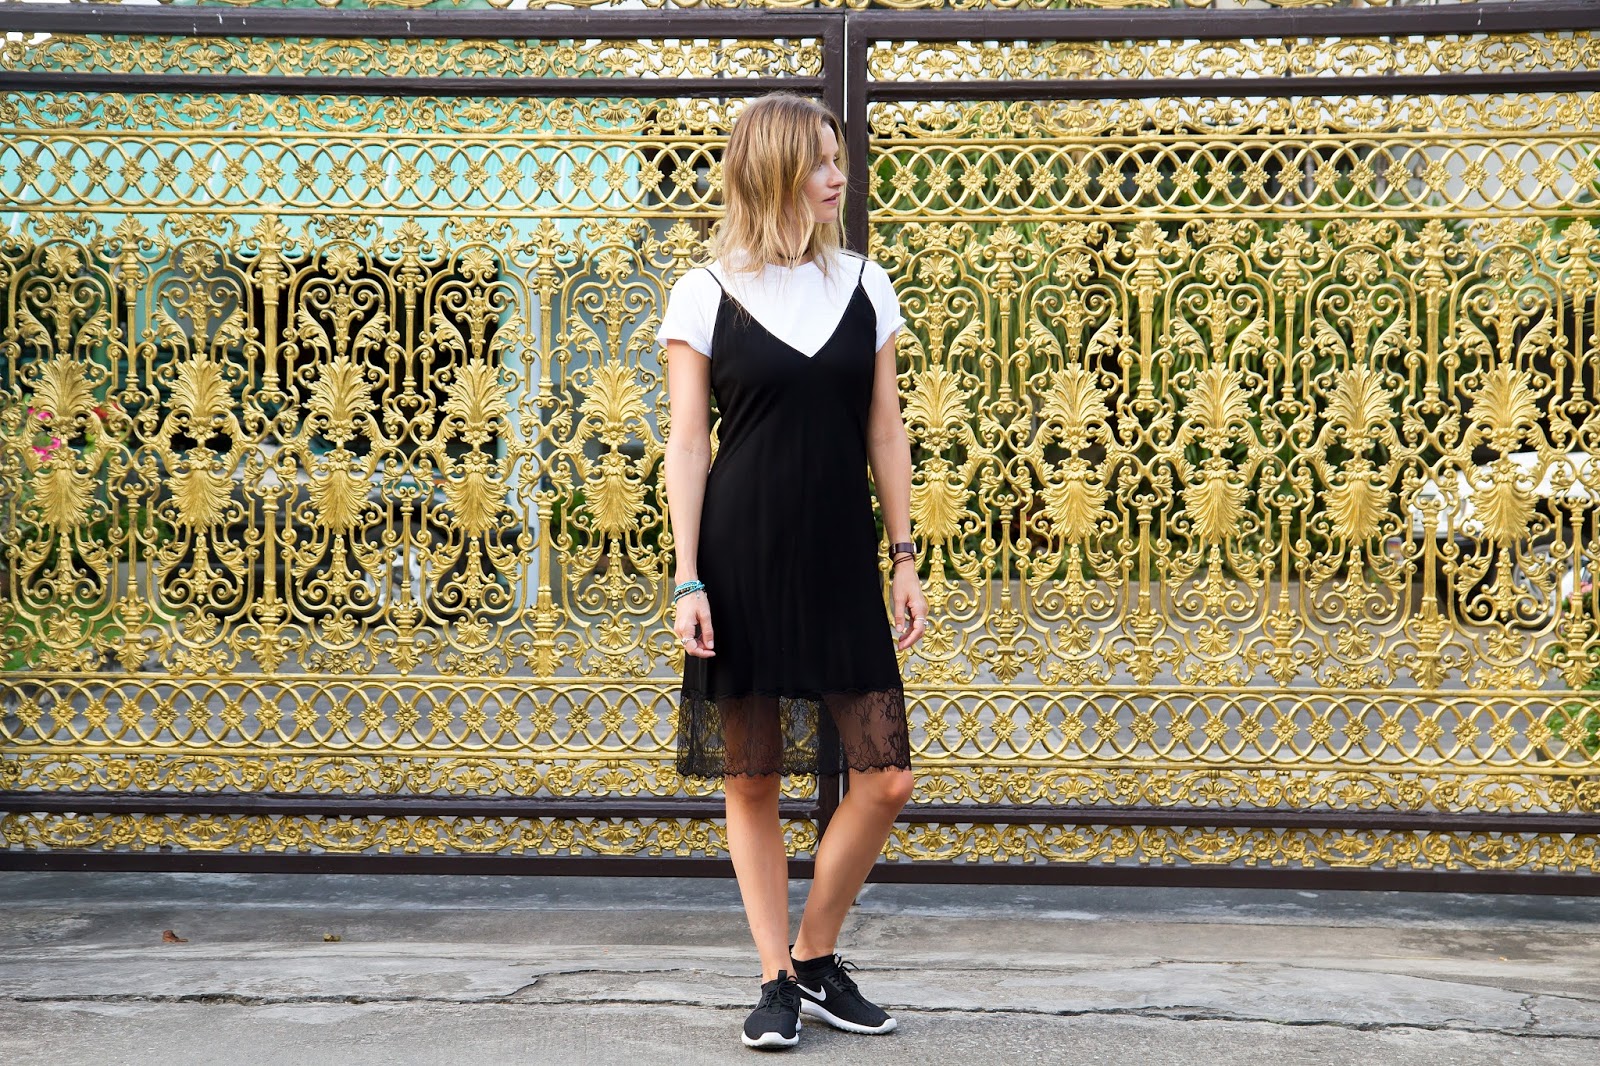 Fashion blogger, Alison Hutchinson, is wearing a white t-shirt under a black slip dress.